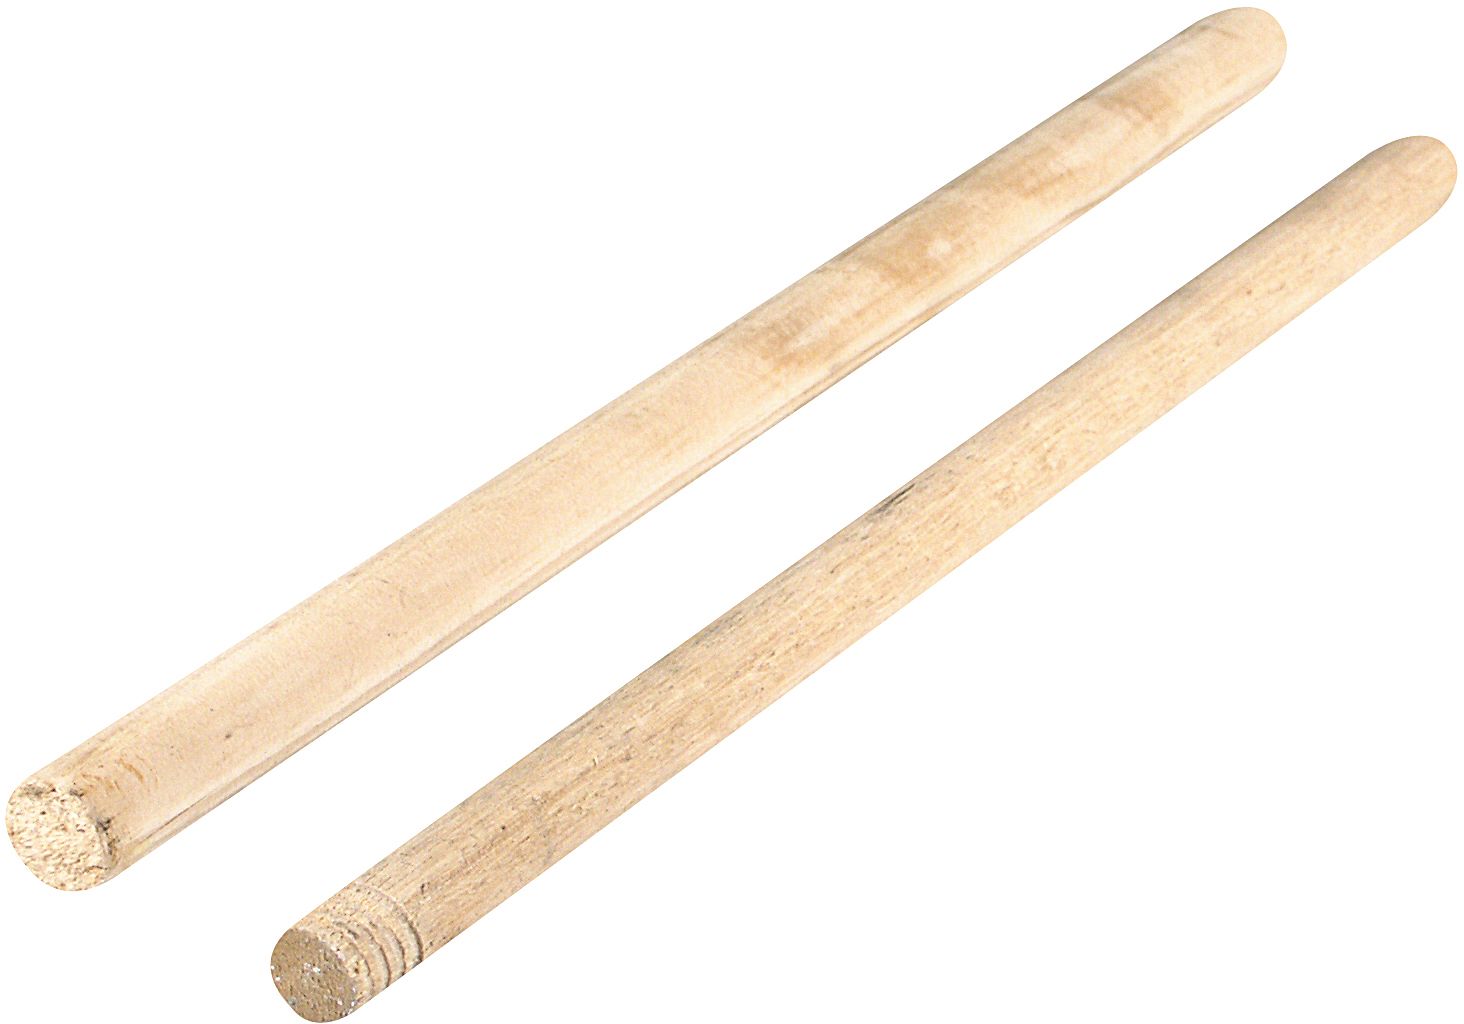 Broom handle, timber 1.2m x 25mm, Varnished.